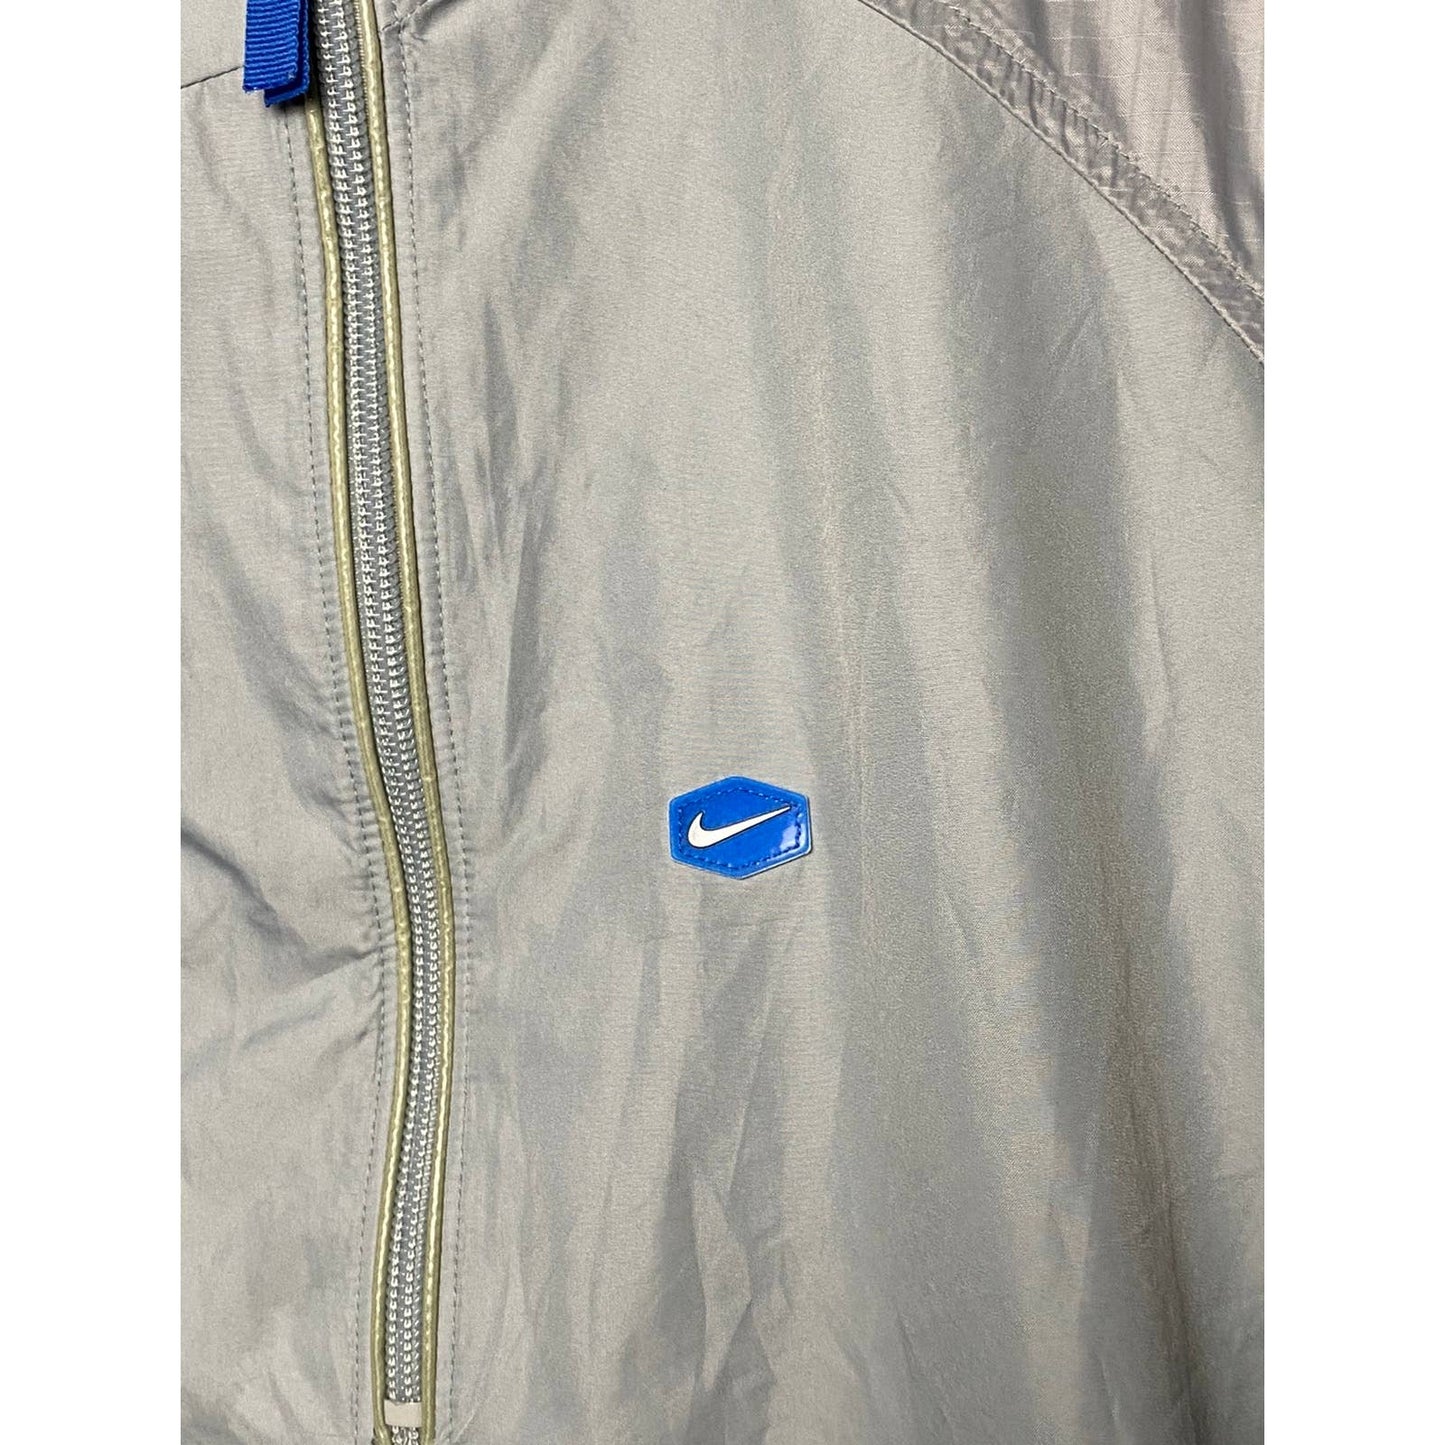 Nike TN vintage grey blue track jacket small hex logo